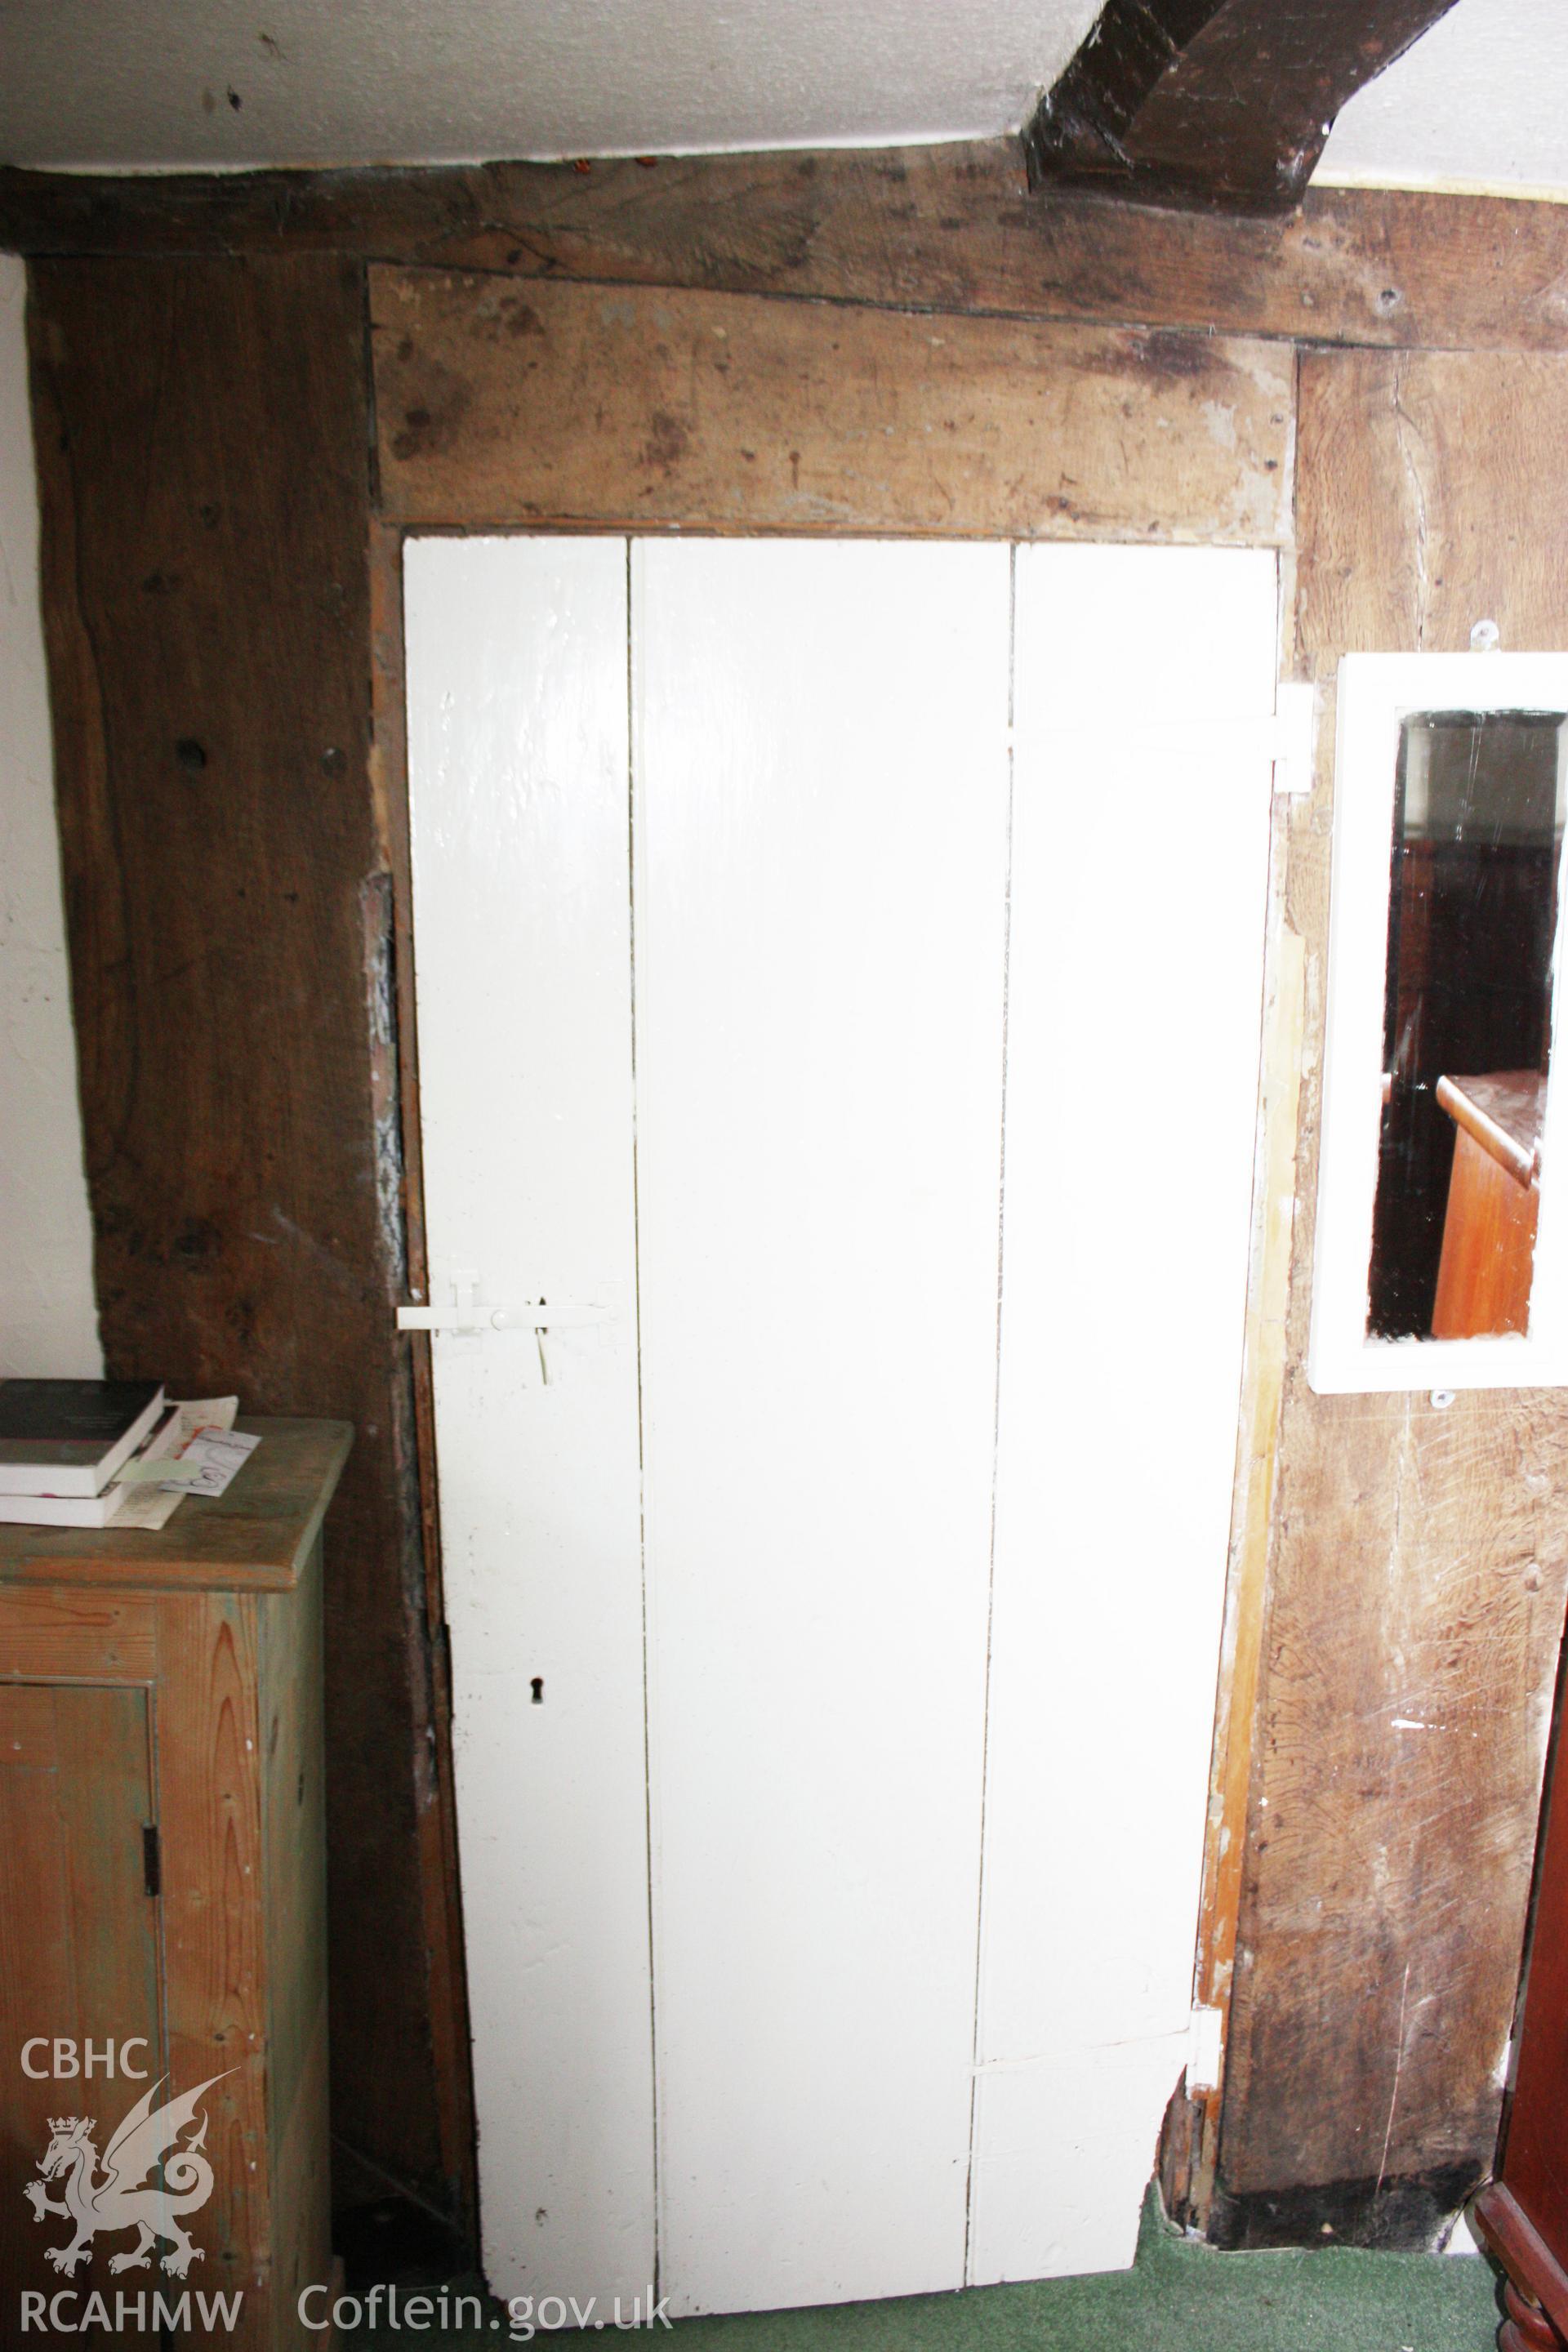 Interior wooden door at Glanhafon-Fawr Farmhouse. Photographic survey of Glanhafon-Fawr Farmhouse conducted by Geoff Ward on 4th November 2010.